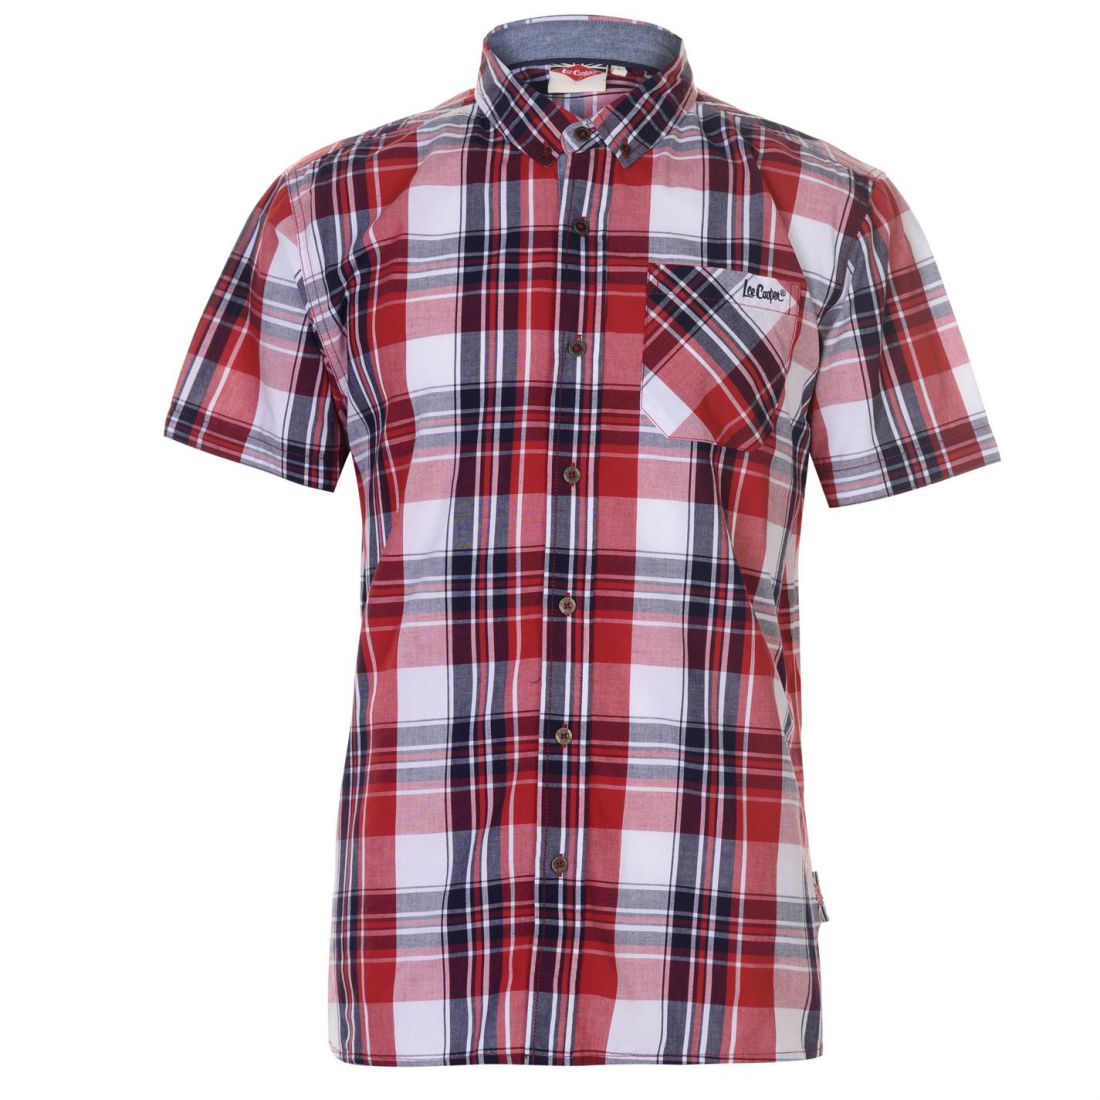 LEE COOPER SHORT Sleeve Check Shirt Mens Gents Everyday - £6.00 ...